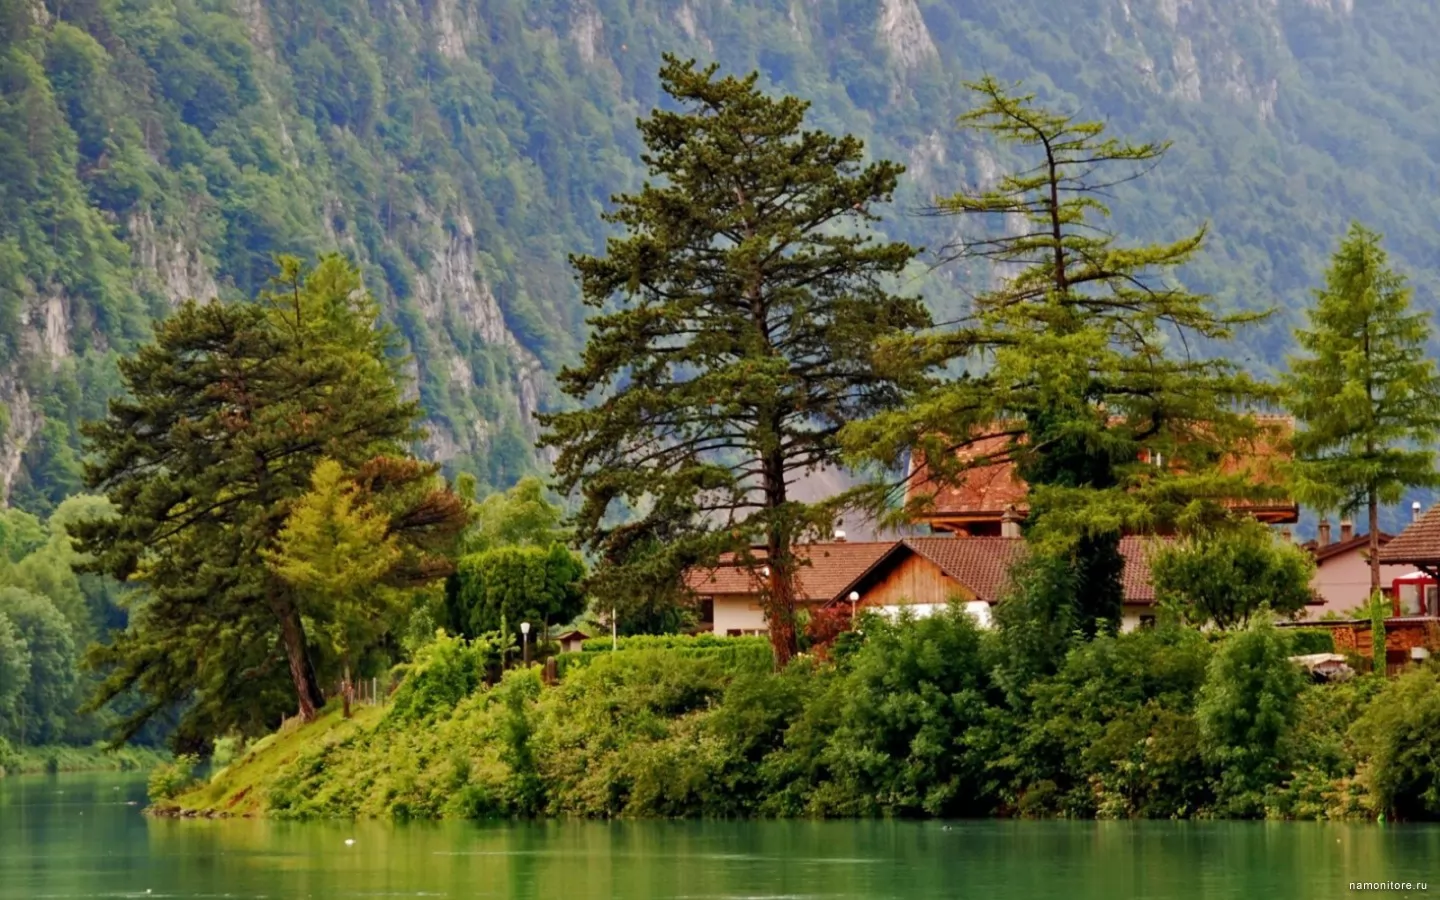 Switzerland, Interlaken, Europe, forest, green, lake, nature, Switzerland x